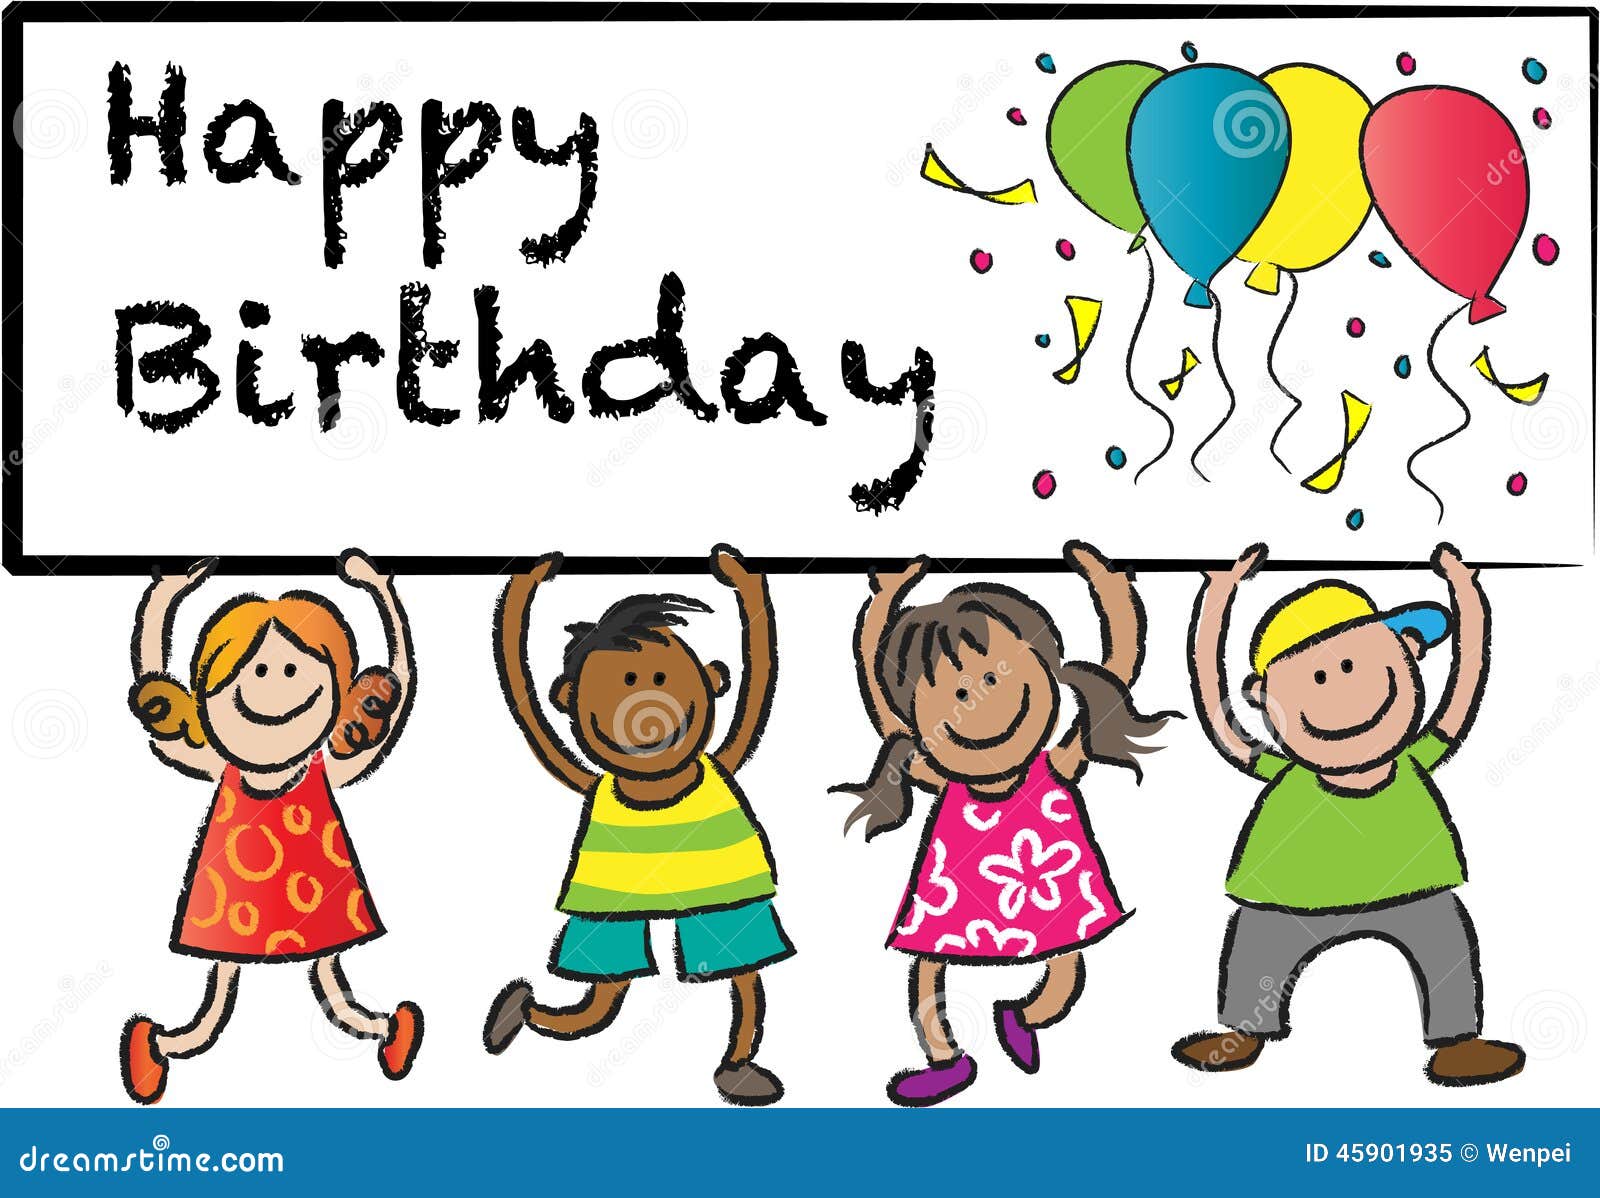 Happy birthday stock illustration. Illustration of kids - 45901935